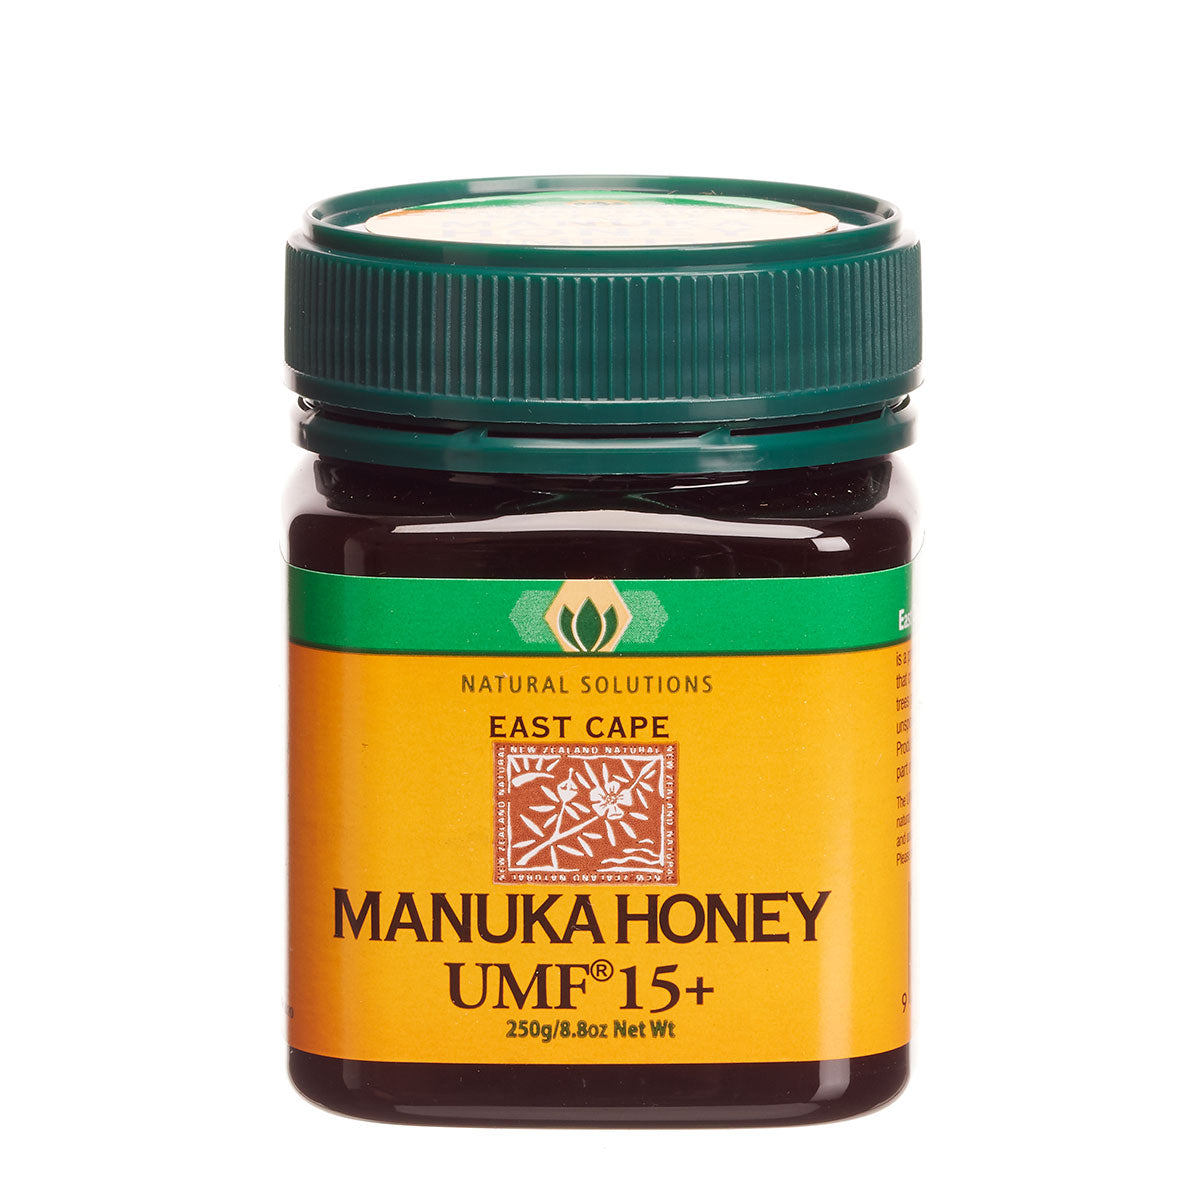 Manuka honey effective treatment for oral bacteria